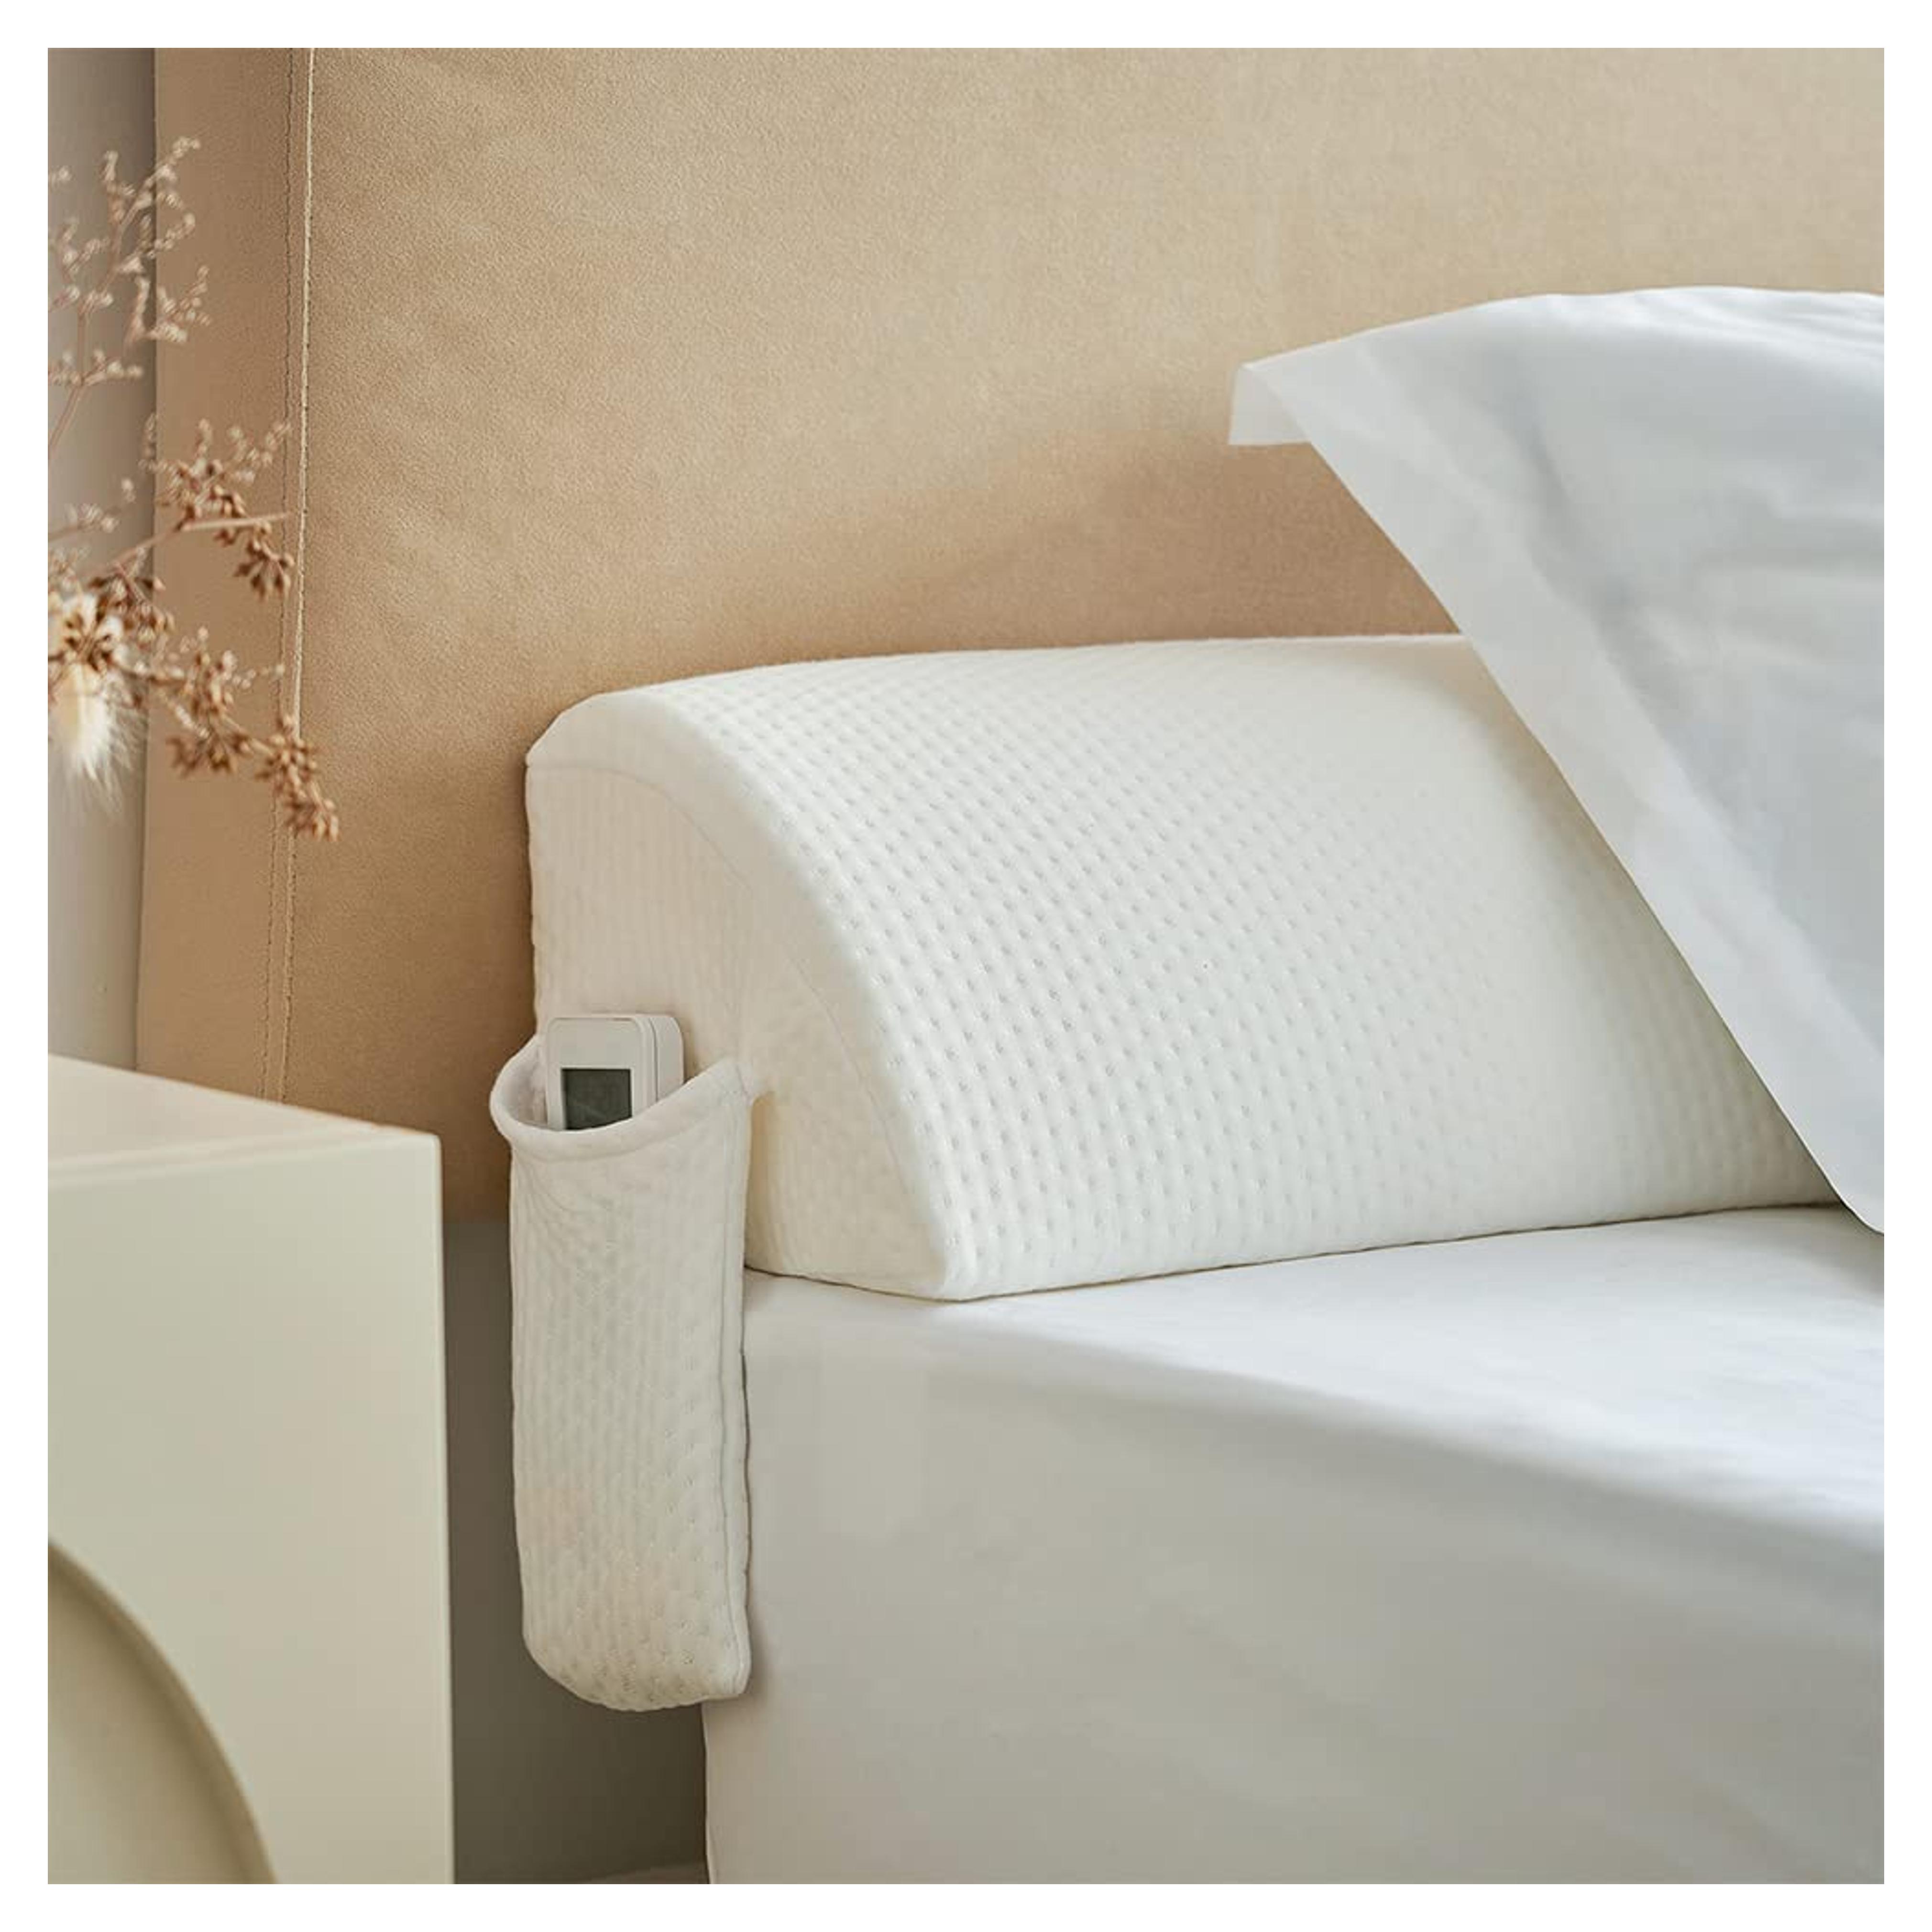 jakoola Bed Wedge Pillow Stopper Mattress Filler Pillow for Gap Between Mattress and Headboard Sideboard Full Size 54” x 8” x 6” Full (Pack of 1)